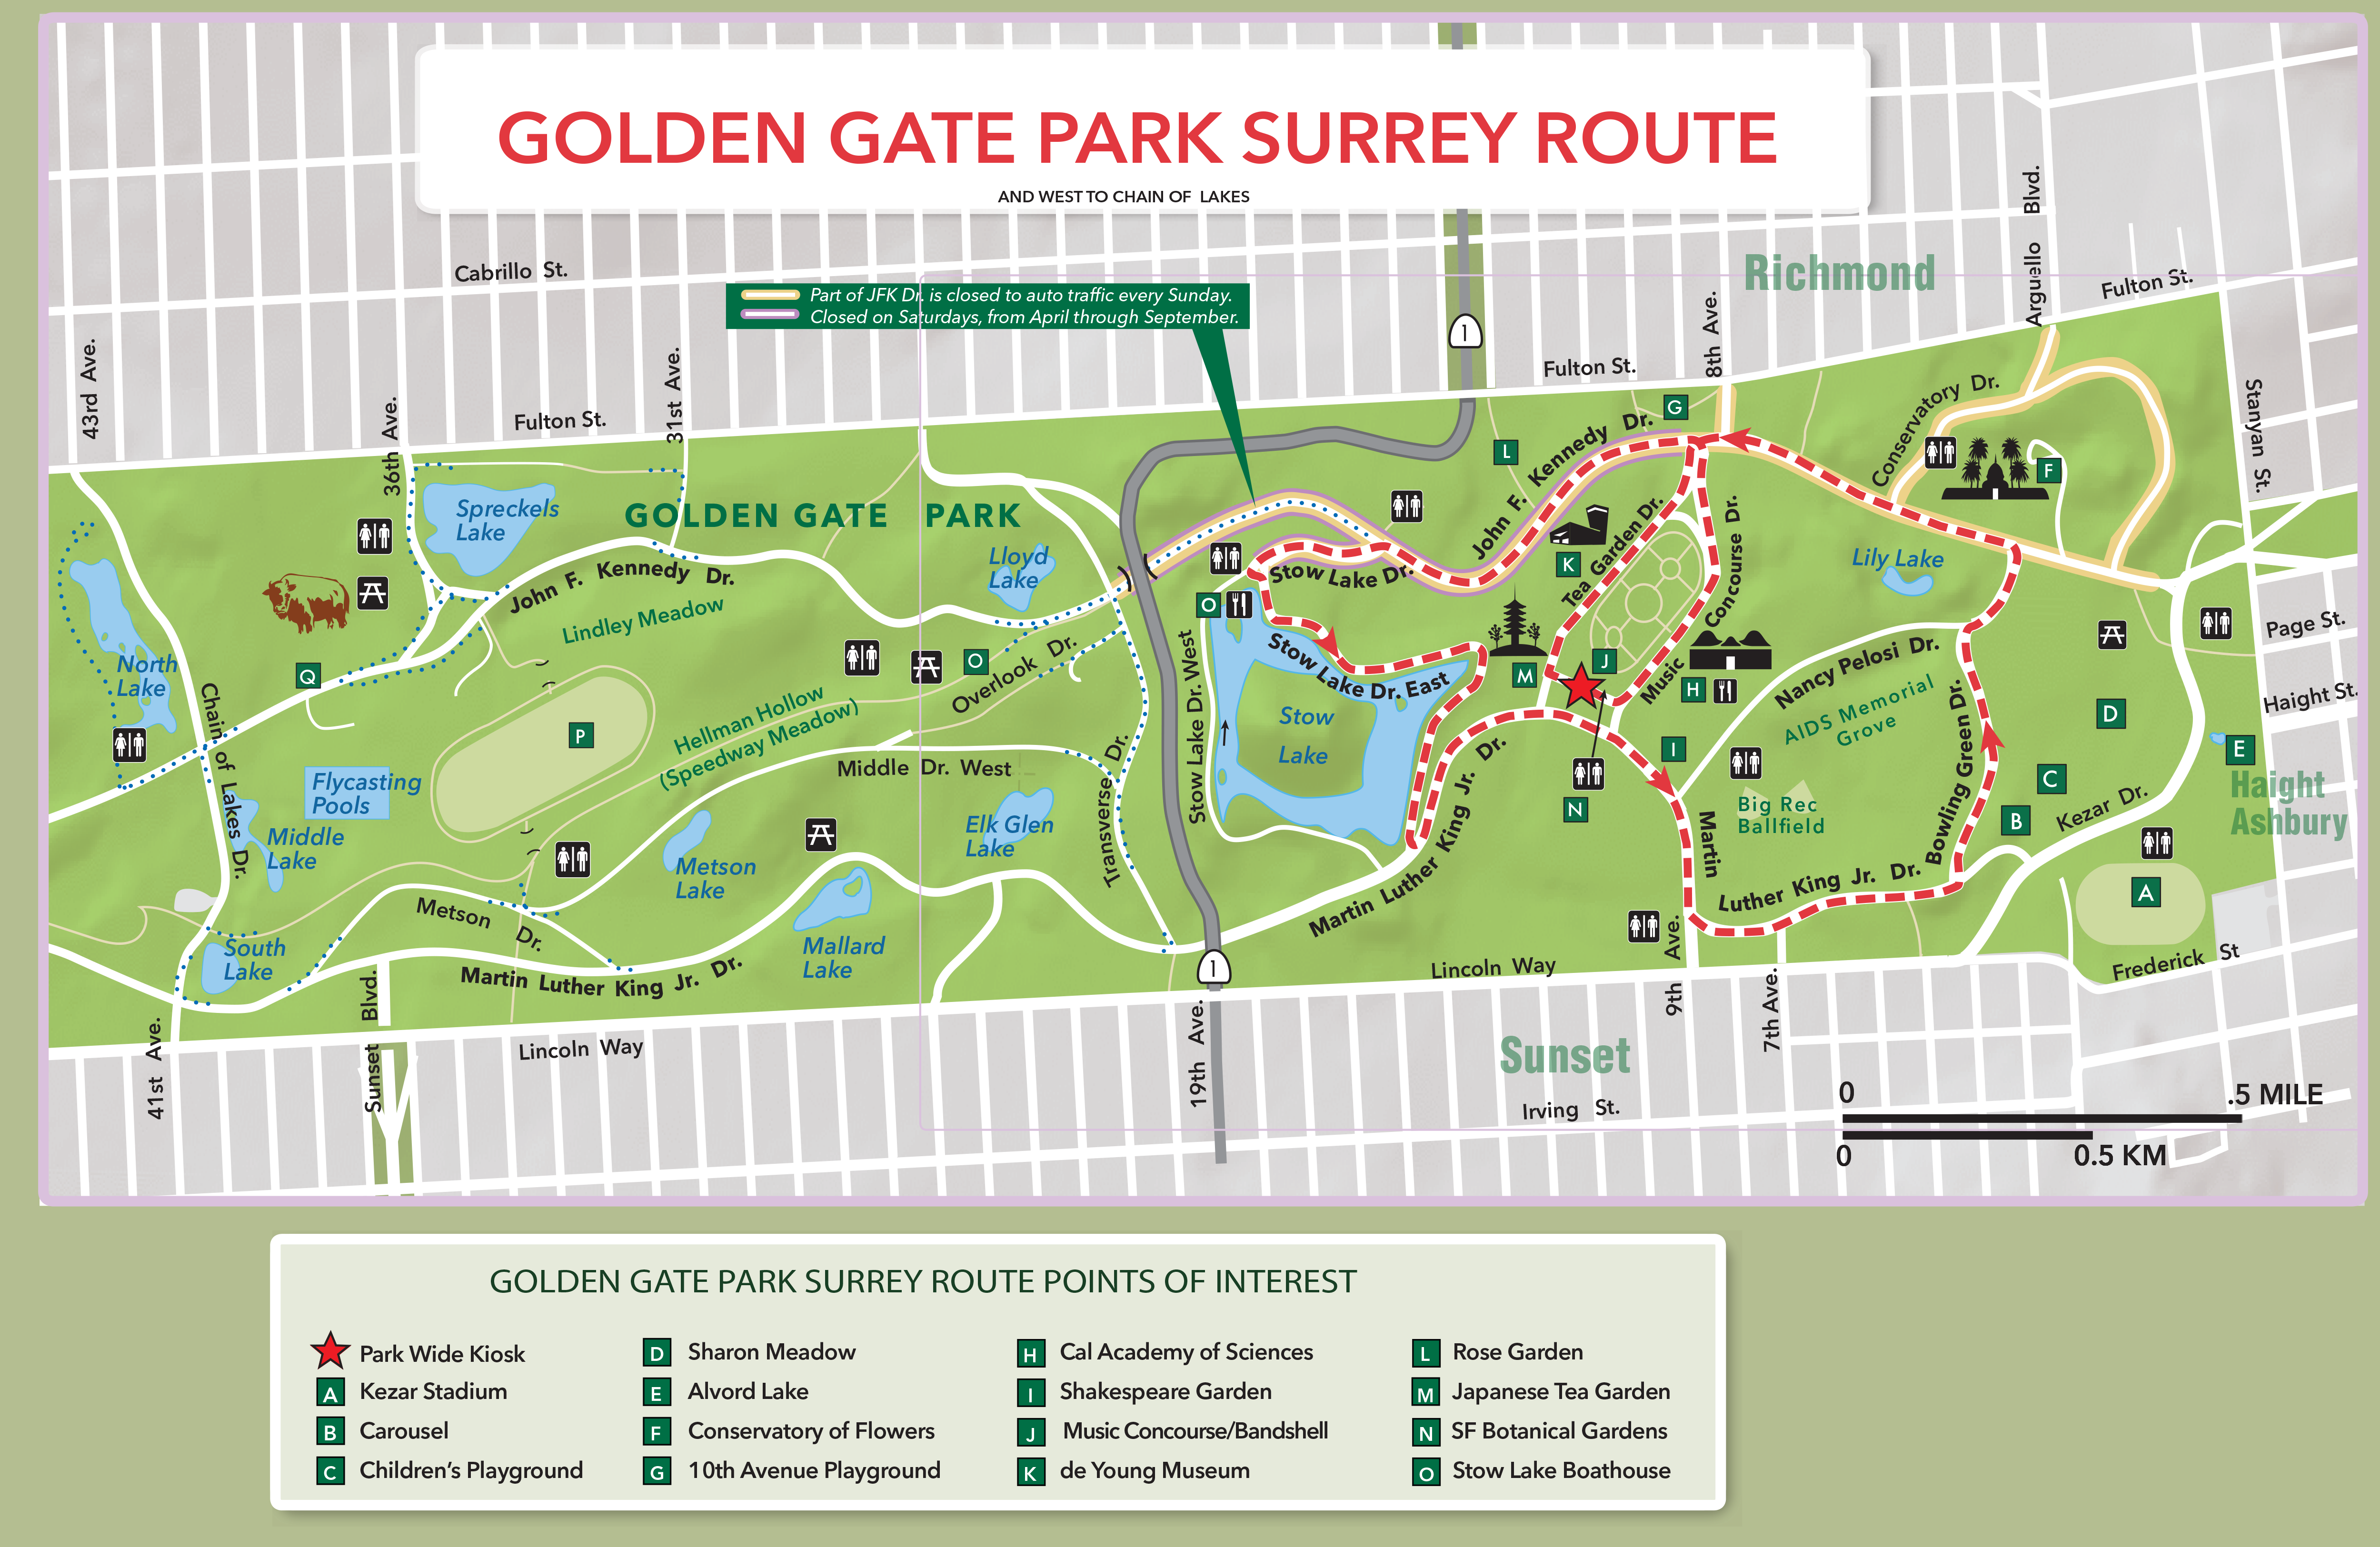 Surrey GGP Route Map 03 2016 2 